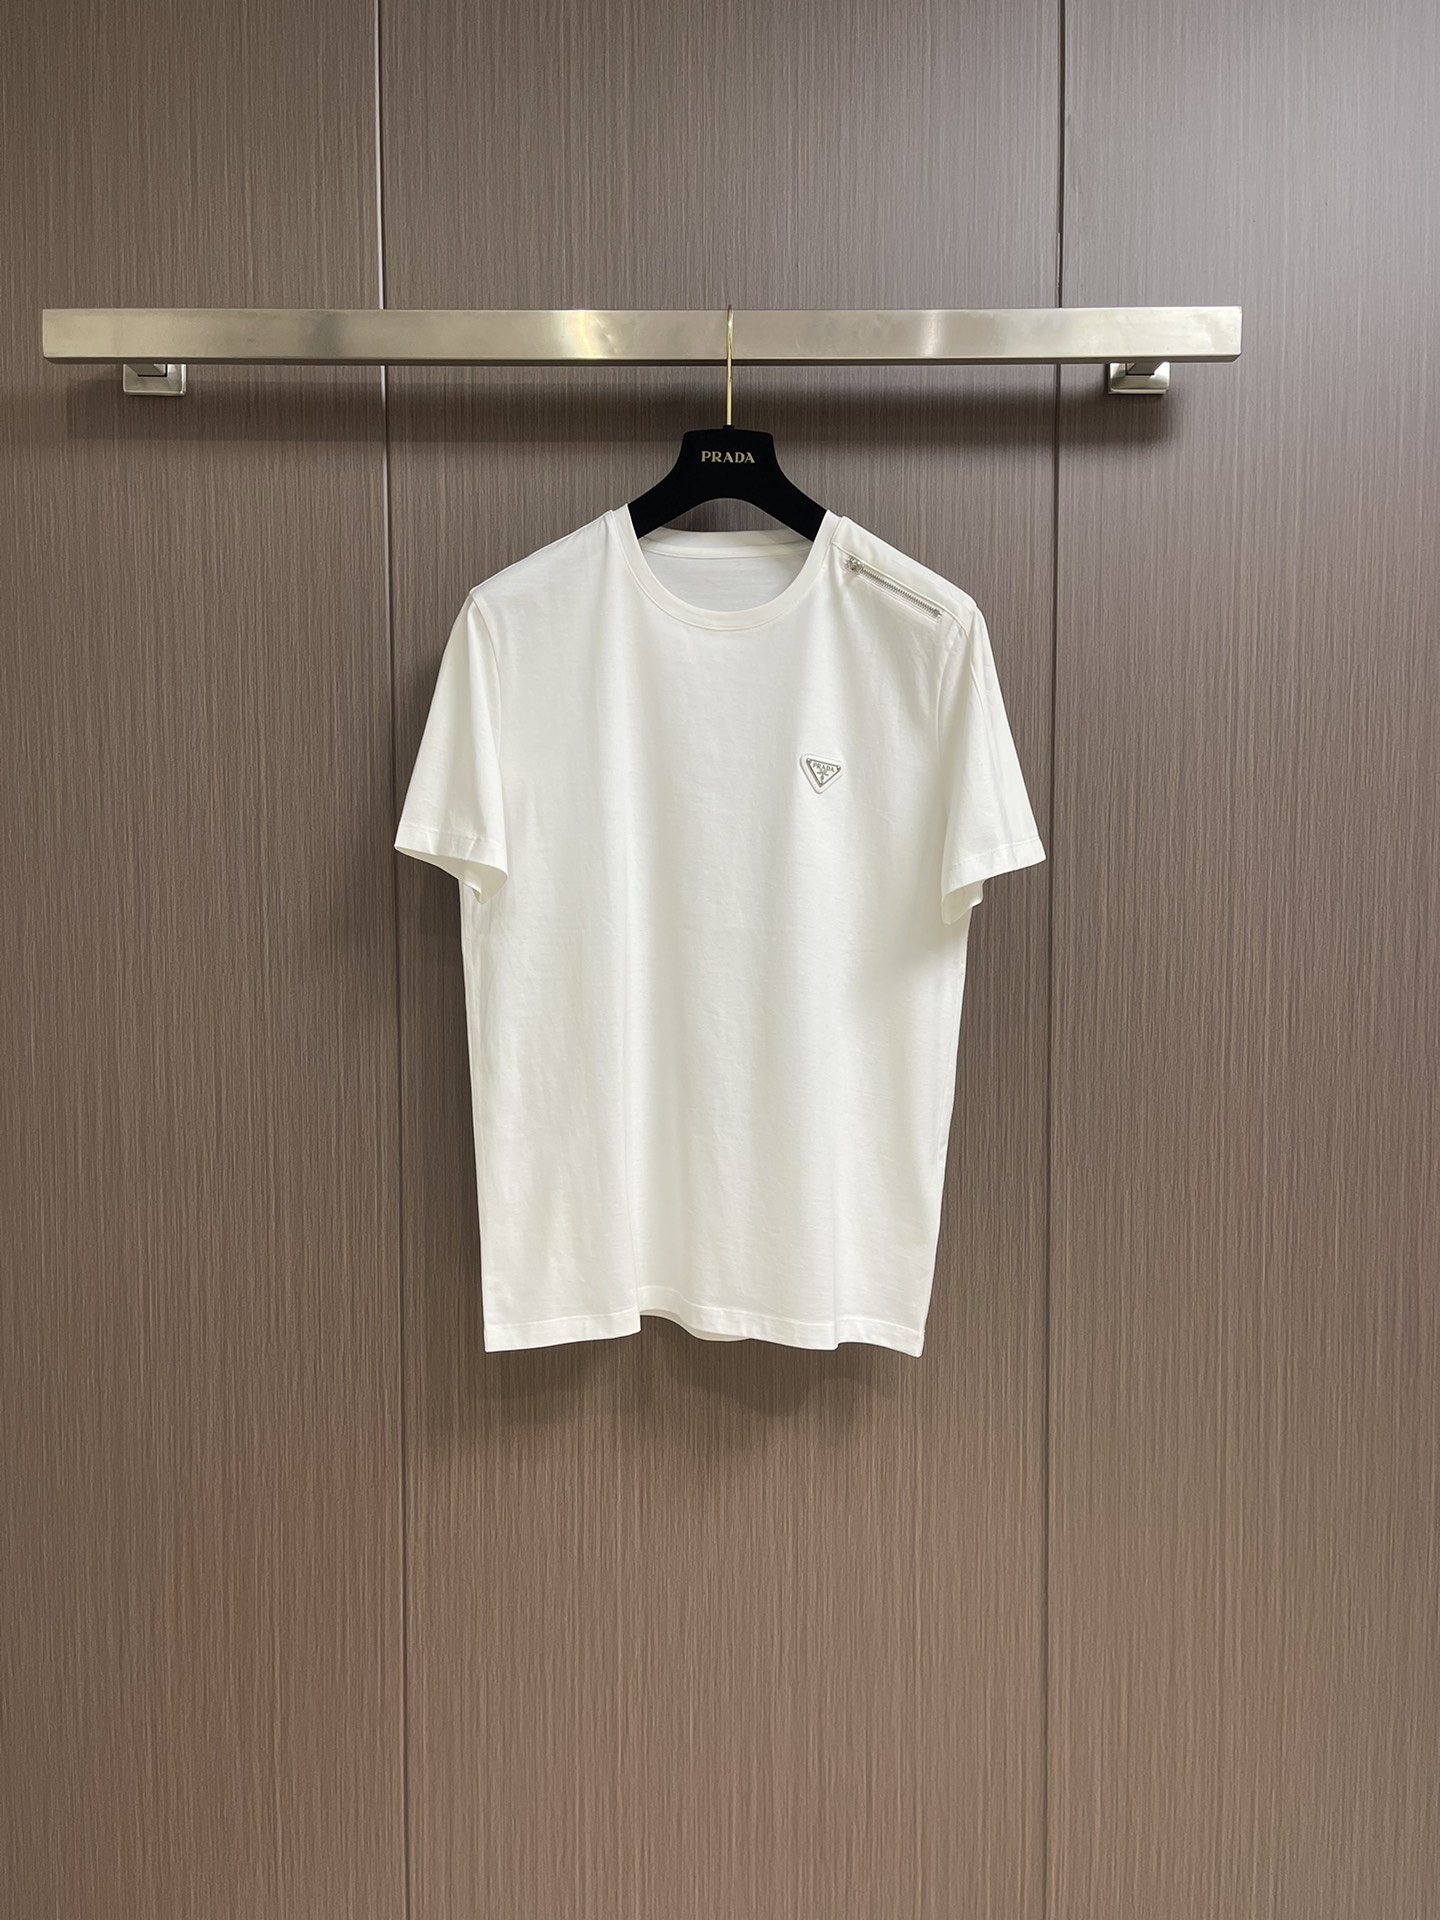 Prada Clothing T-Shirt Splicing Men Cotton Mercerized Spring/Summer Collection Fashion Short Sleeve